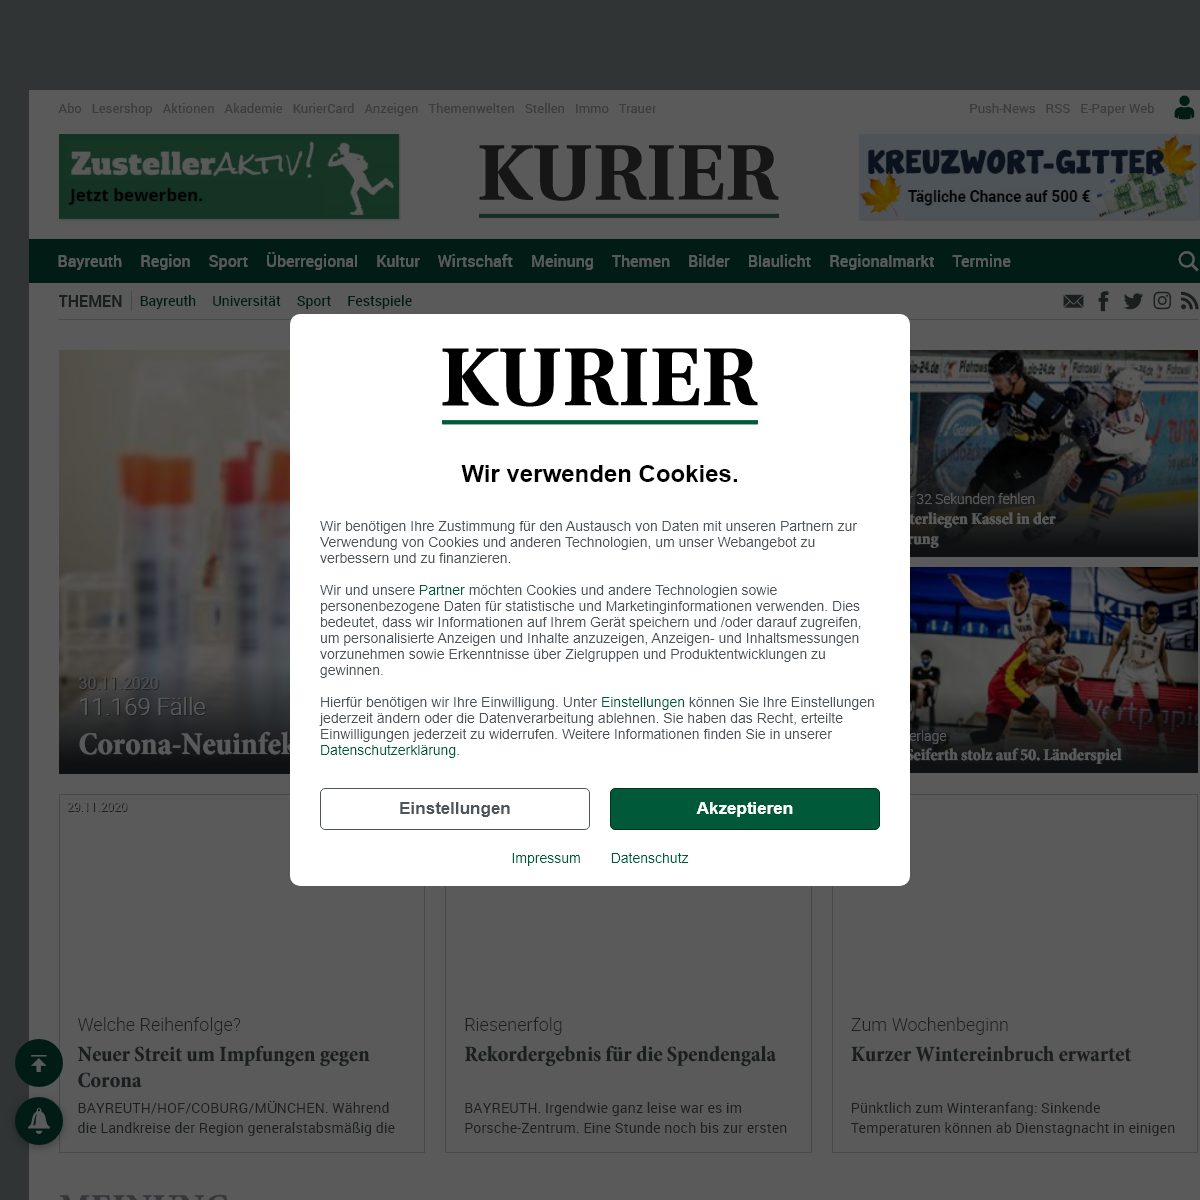 A complete backup of kurier.de